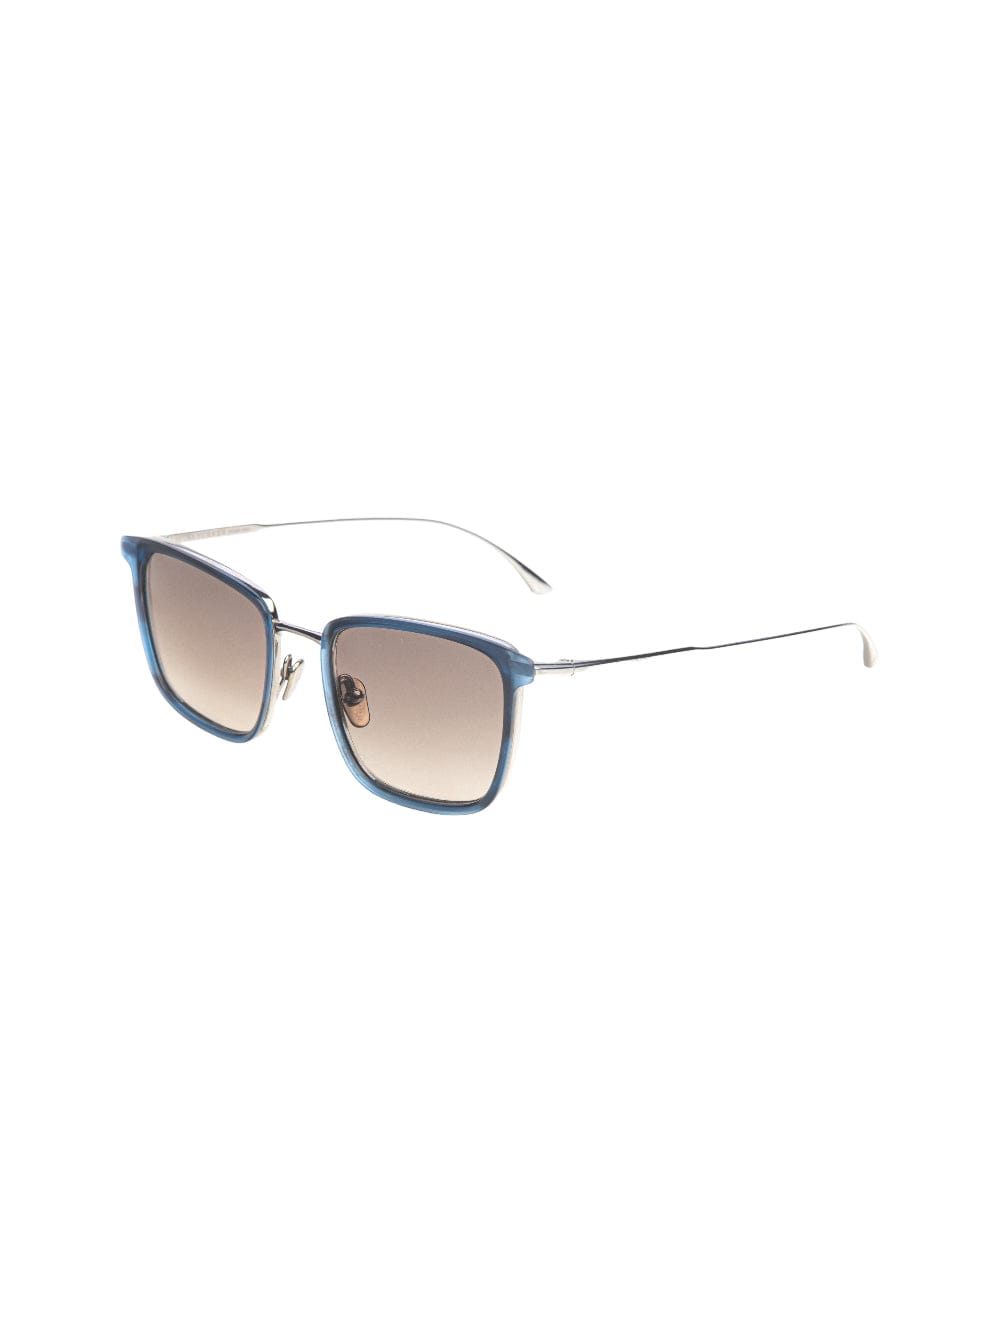 Masunaga Empire I - Blue Sunglasses